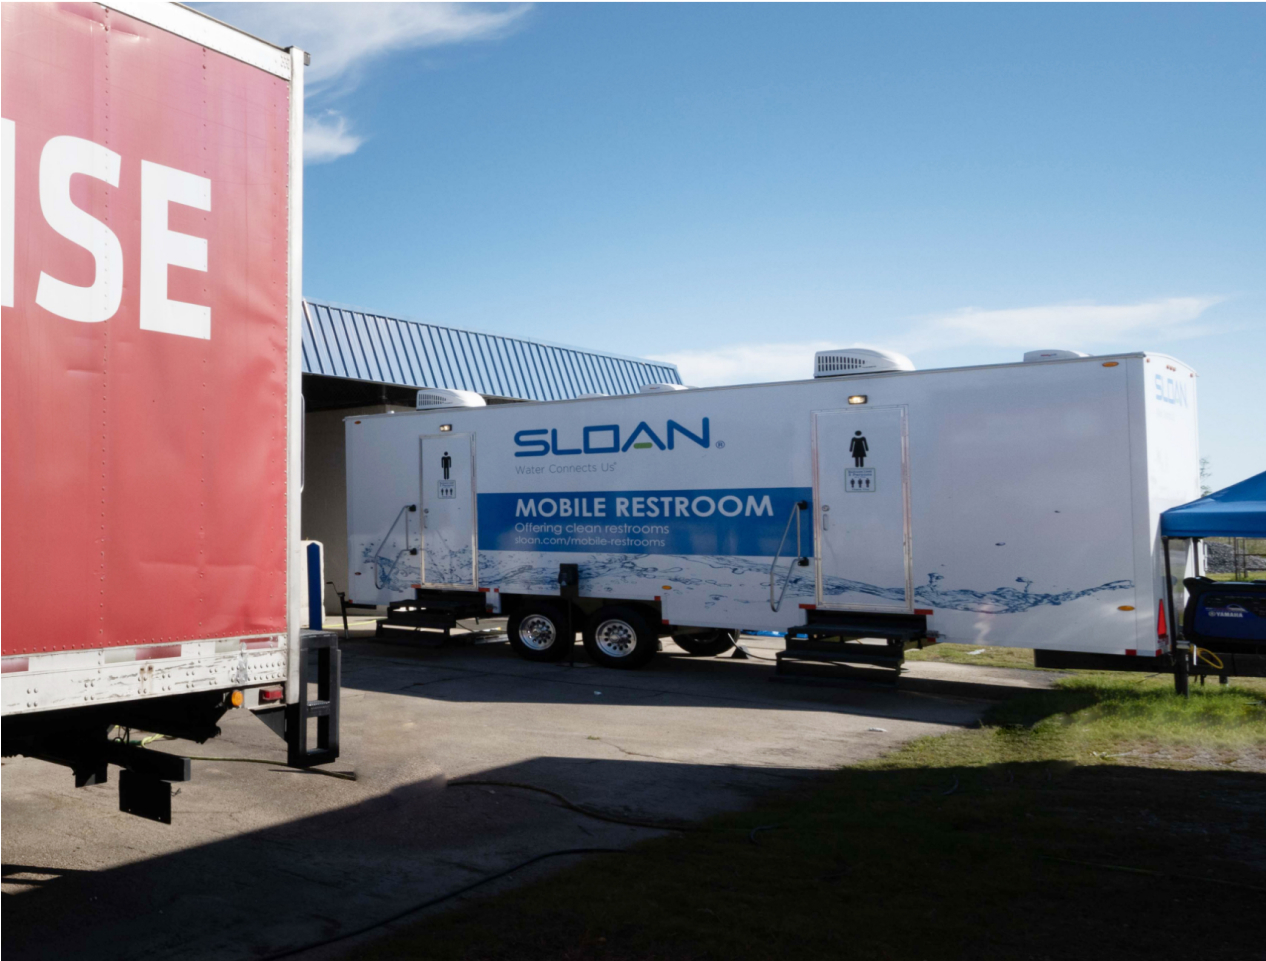 Sloan Mobile Restroom Truck